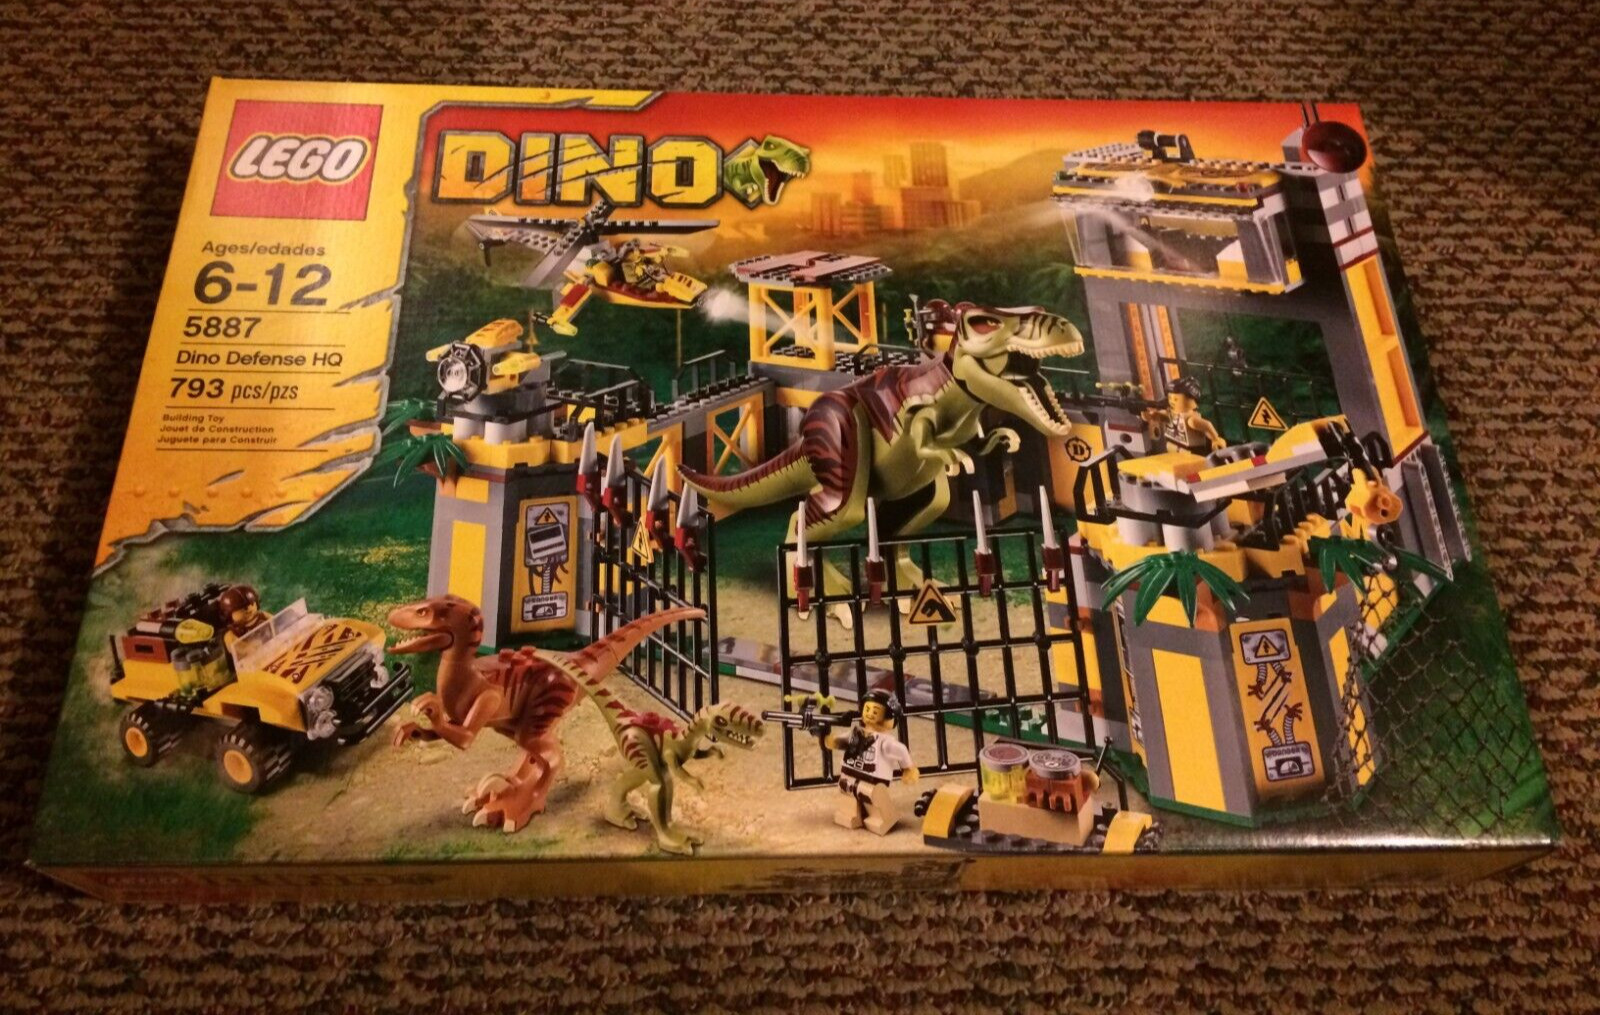 LEGO 5887 Dino Defense HQ - BRAND NEW SEALED, Slightly Creased